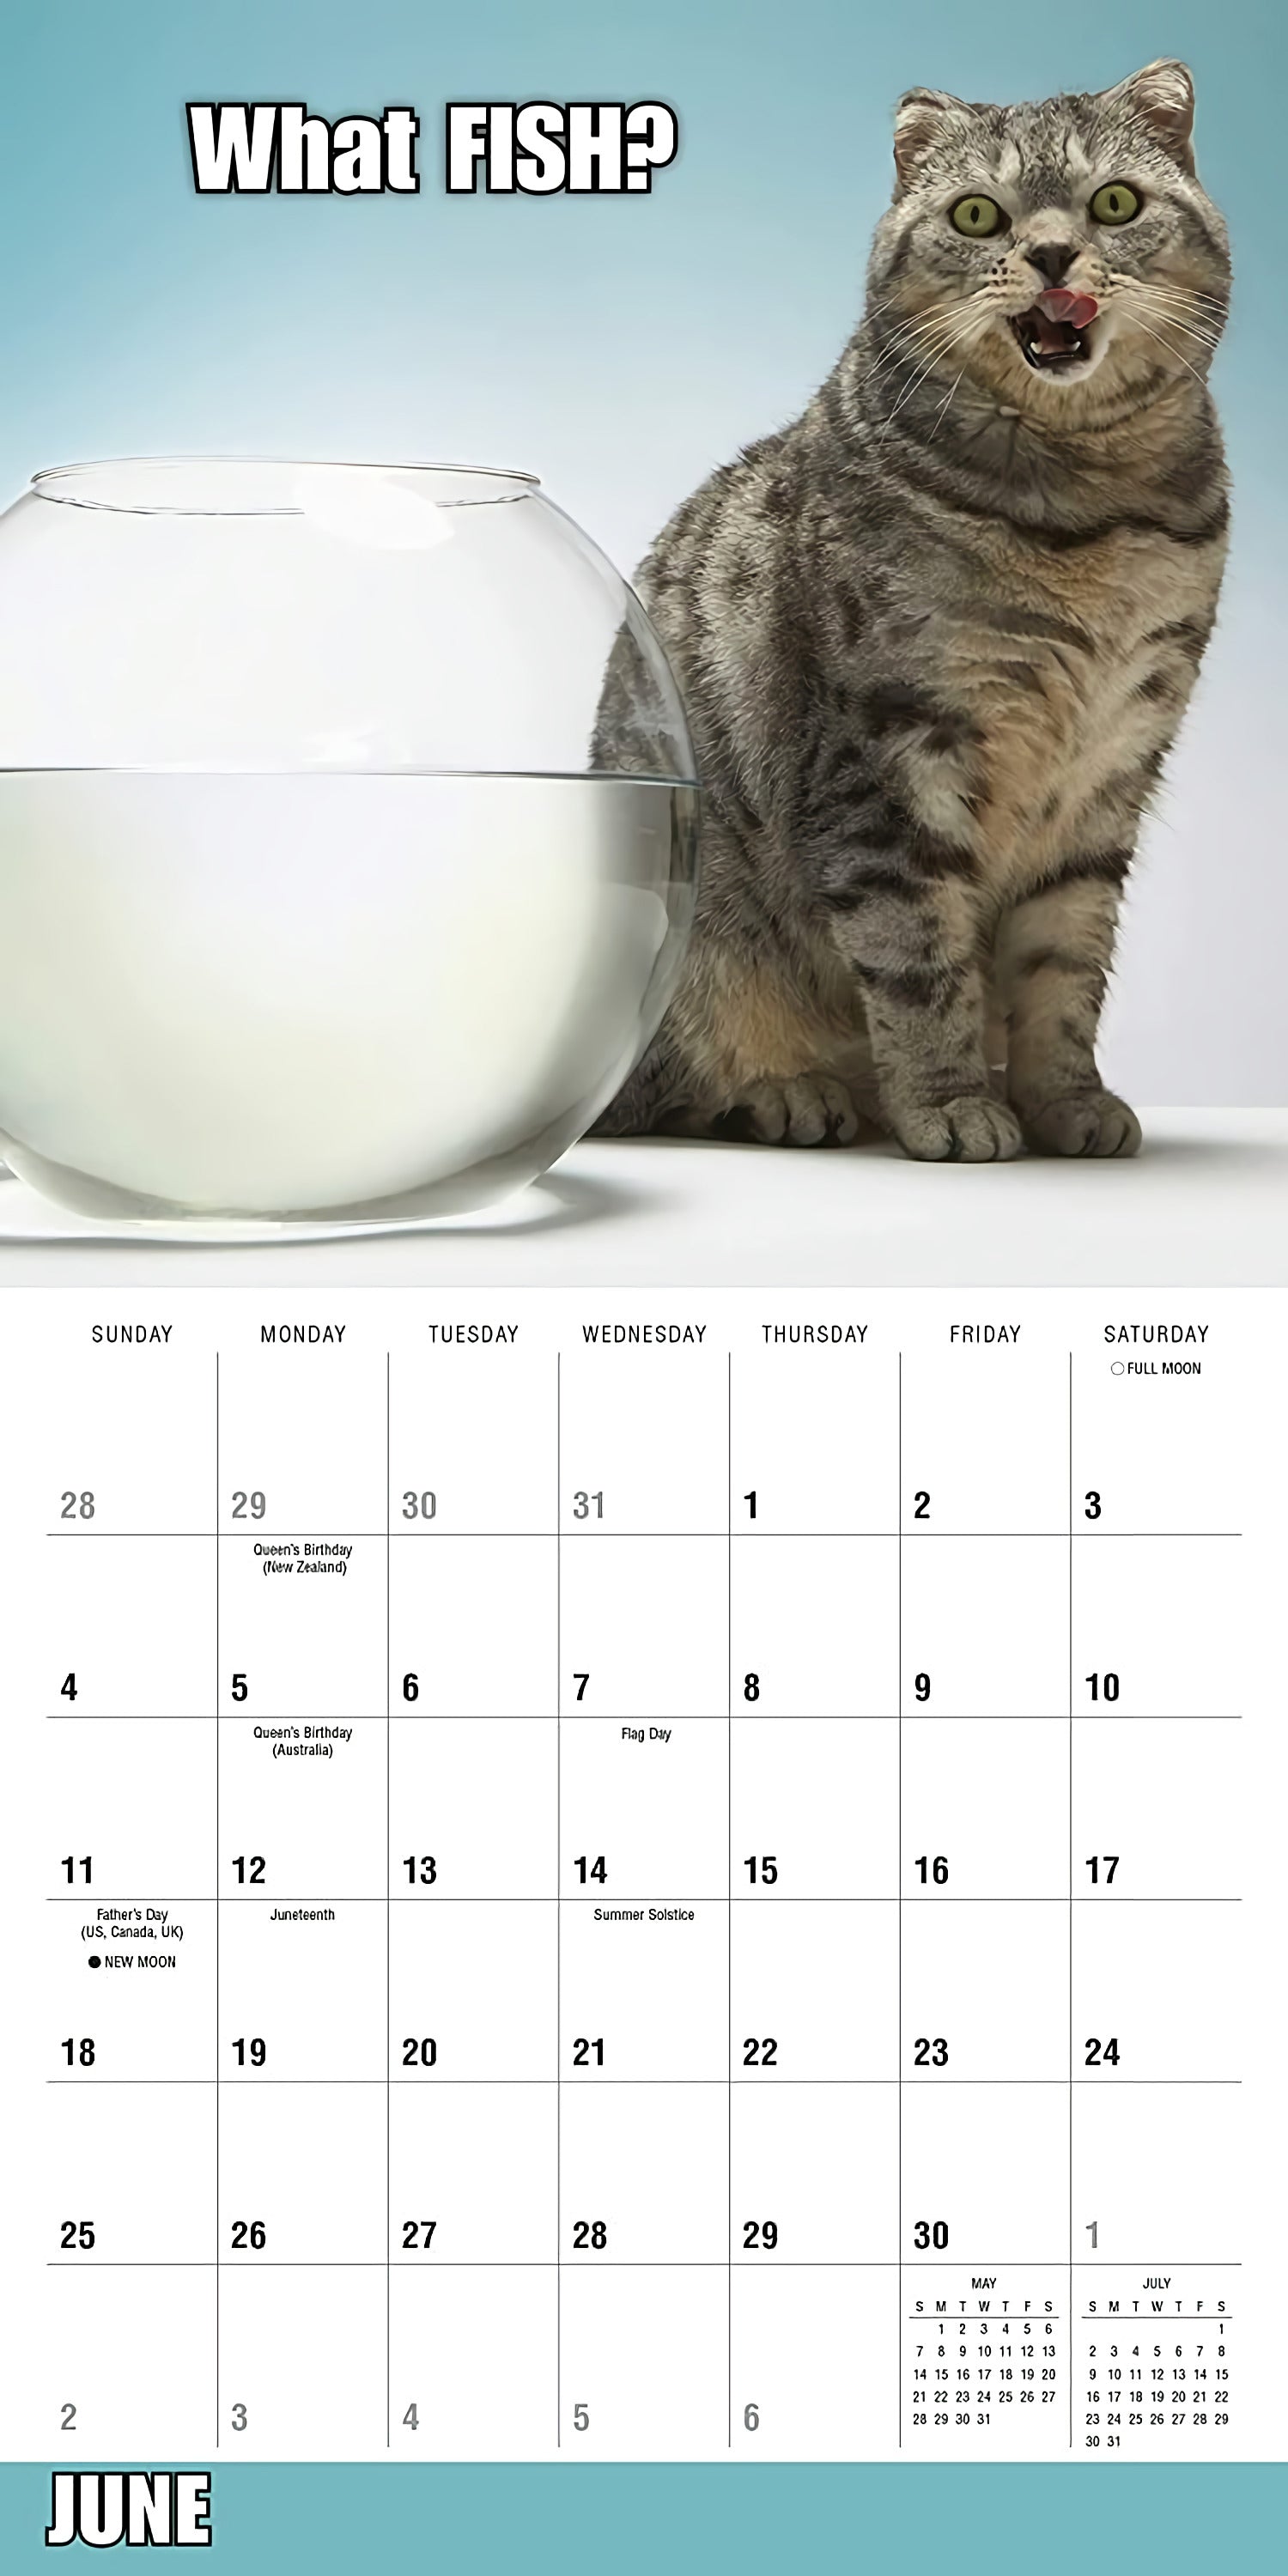 2023 Meow Memes Wall Calendar